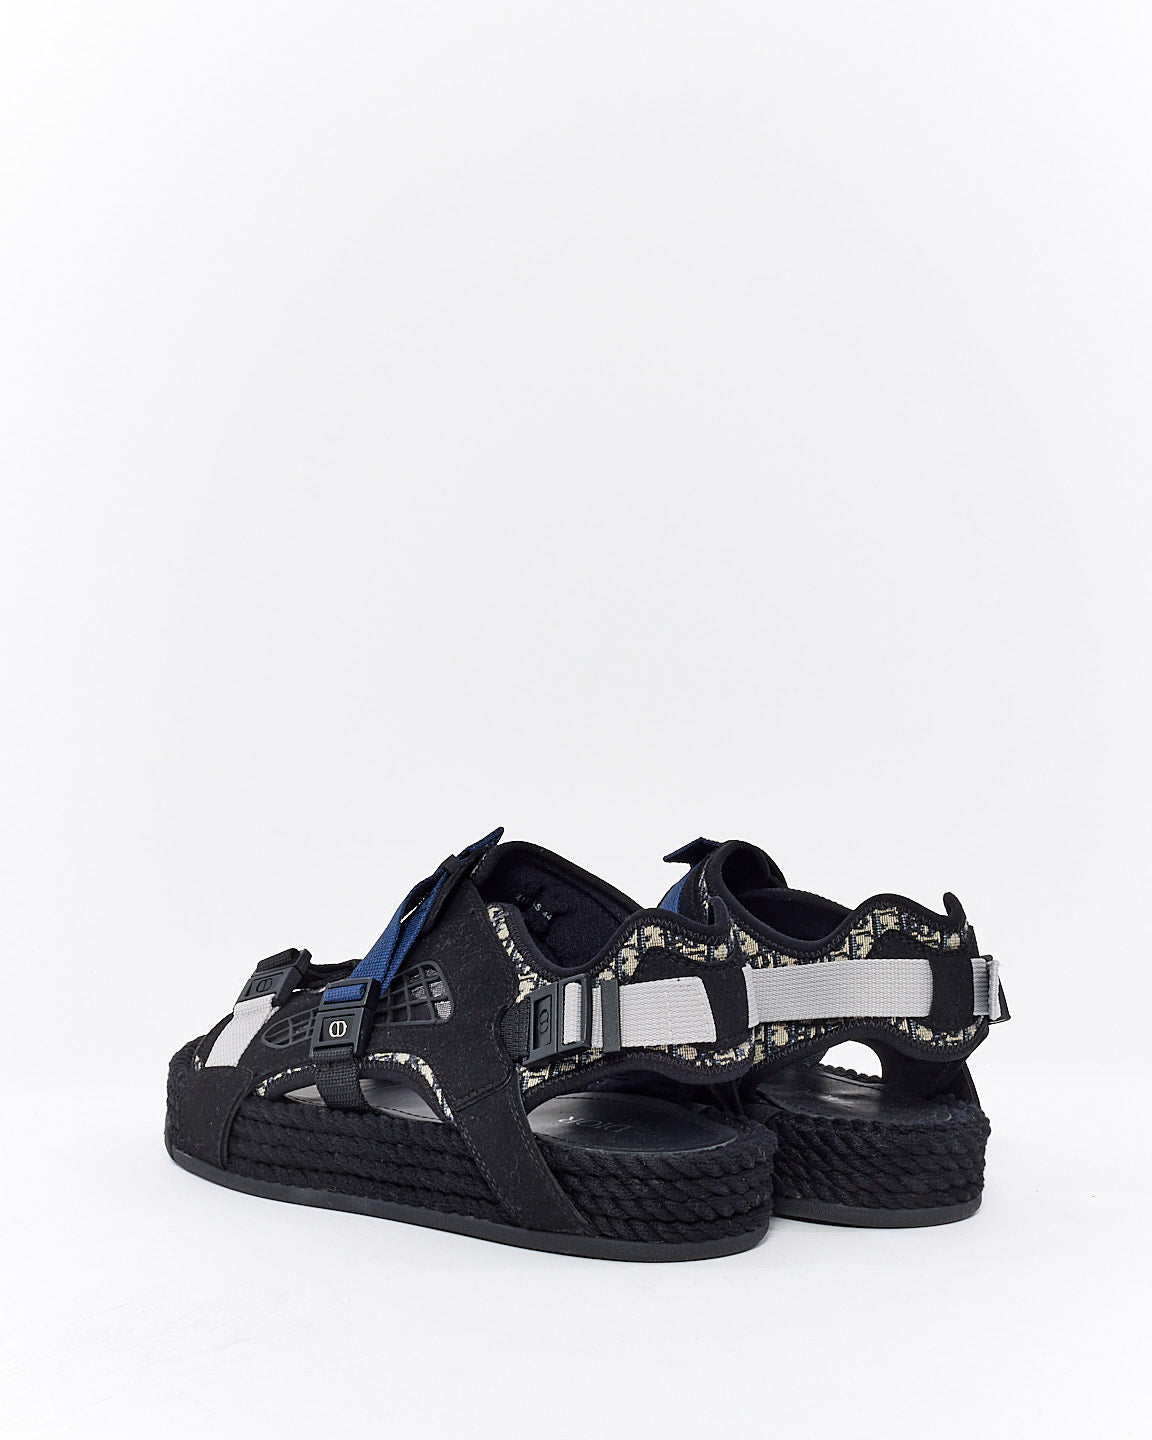 Dior Men's Black Suede & Canvas Sandals - 44